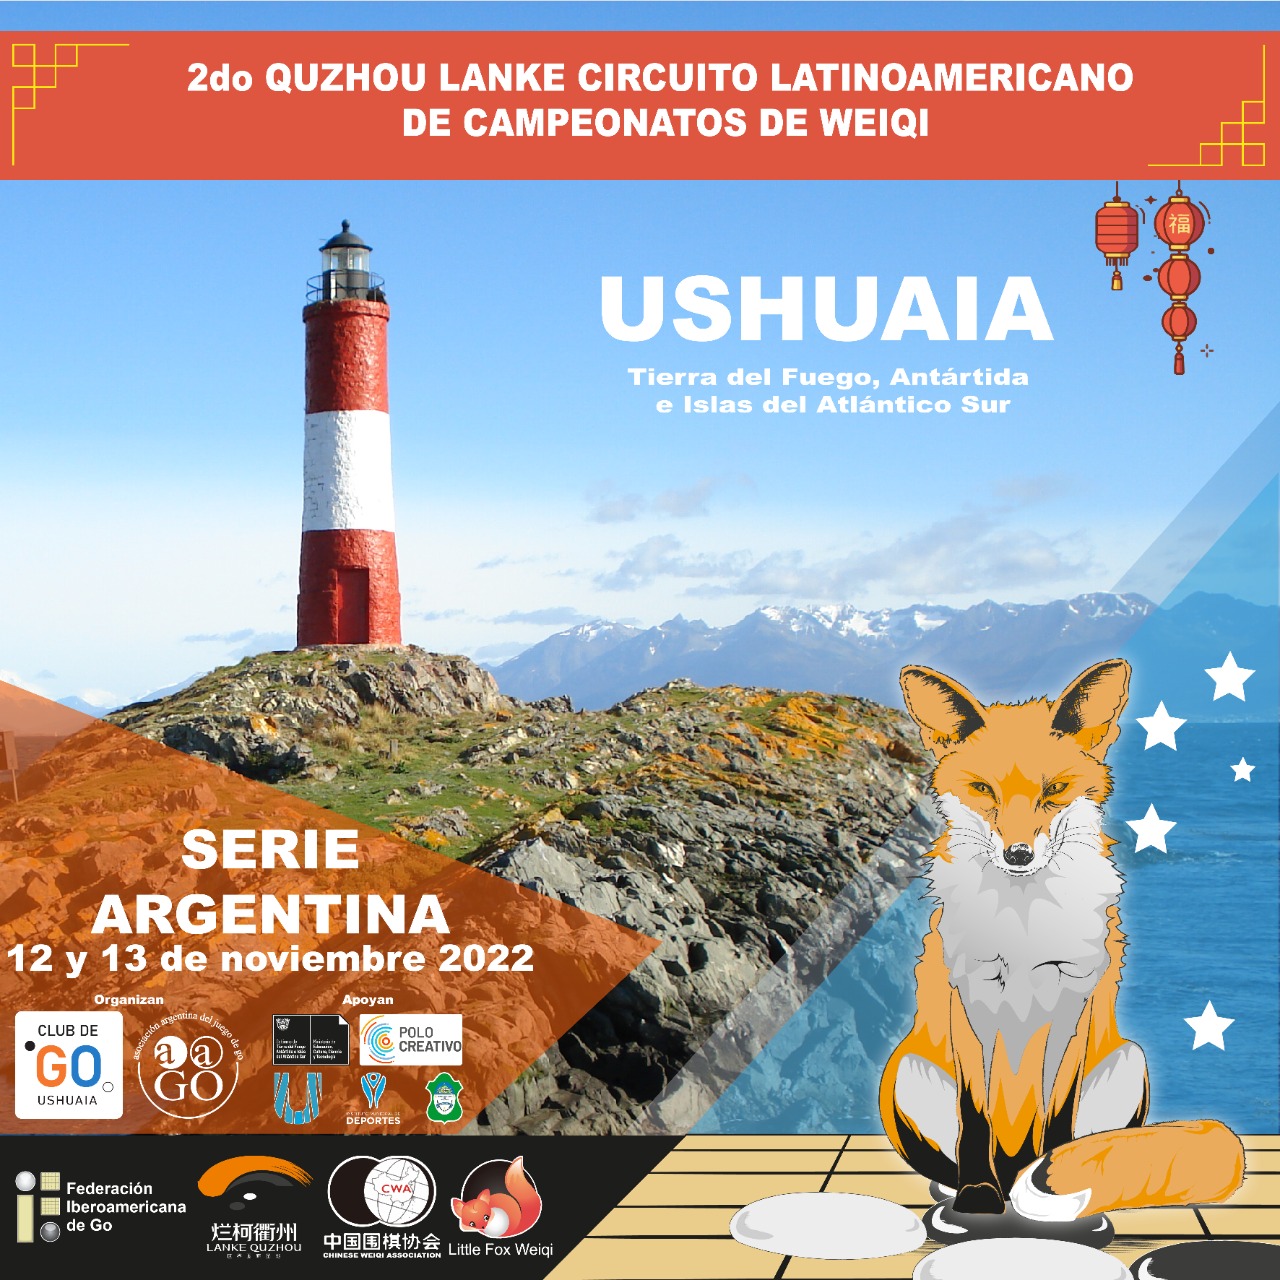 Serie Argentina - 2.º Quzhou Lanke Circuito Latinoamericano de Campeonatos de Weiqi 2022